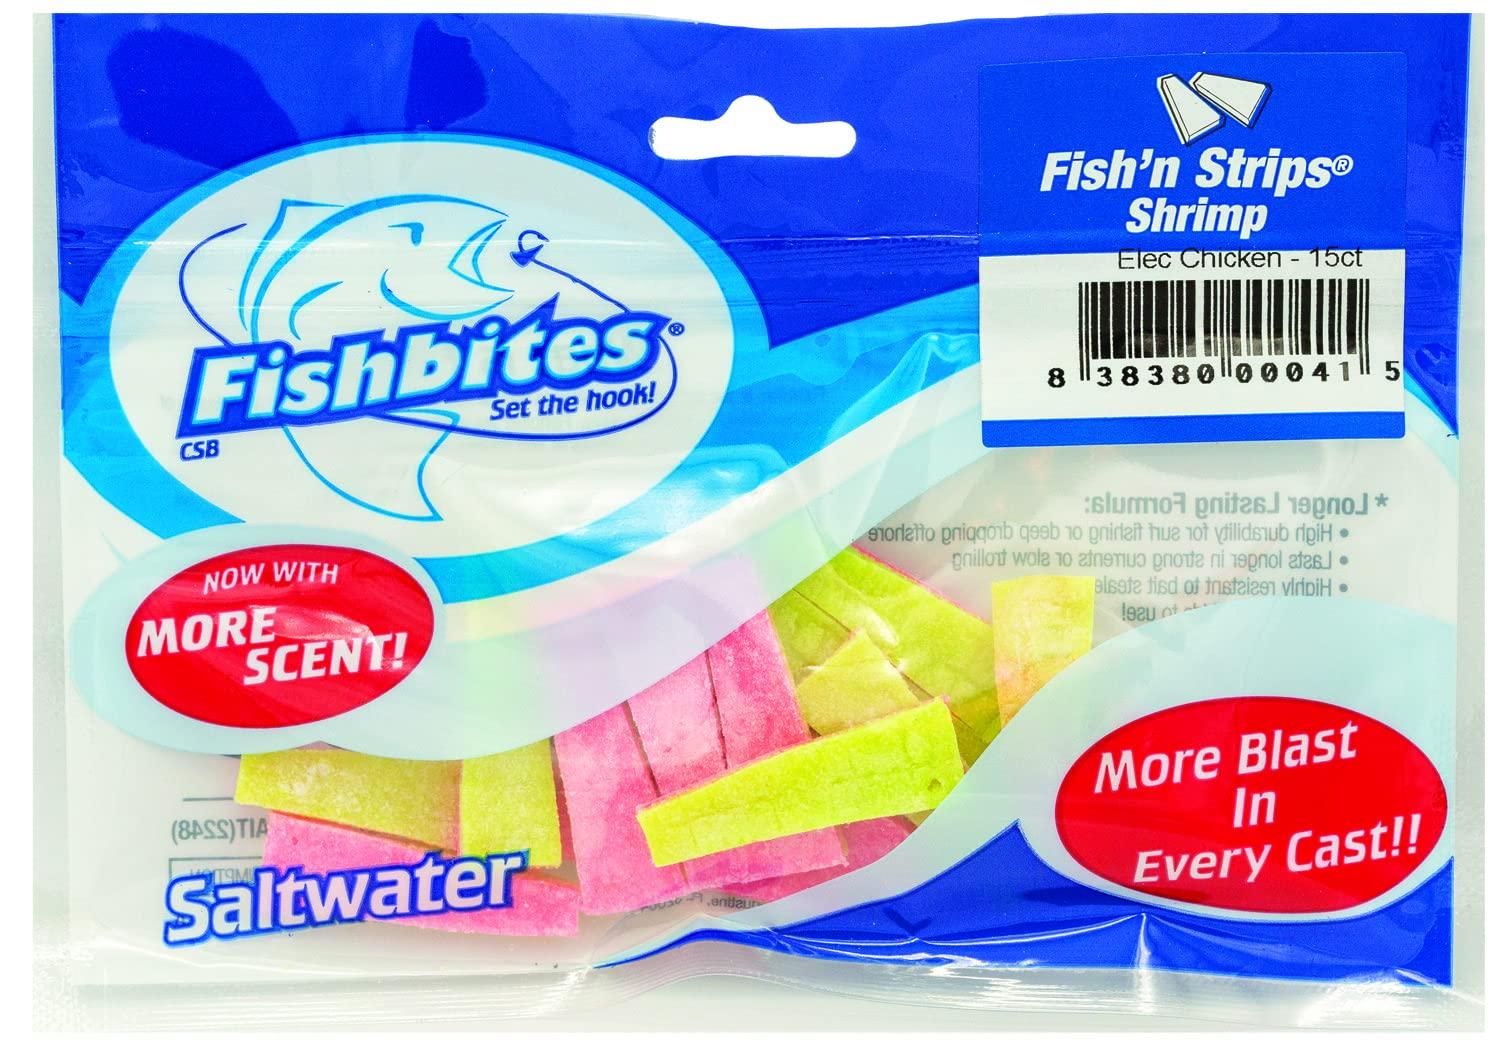 FishBites Fish'n Strips - Shrimp Electric Chicken